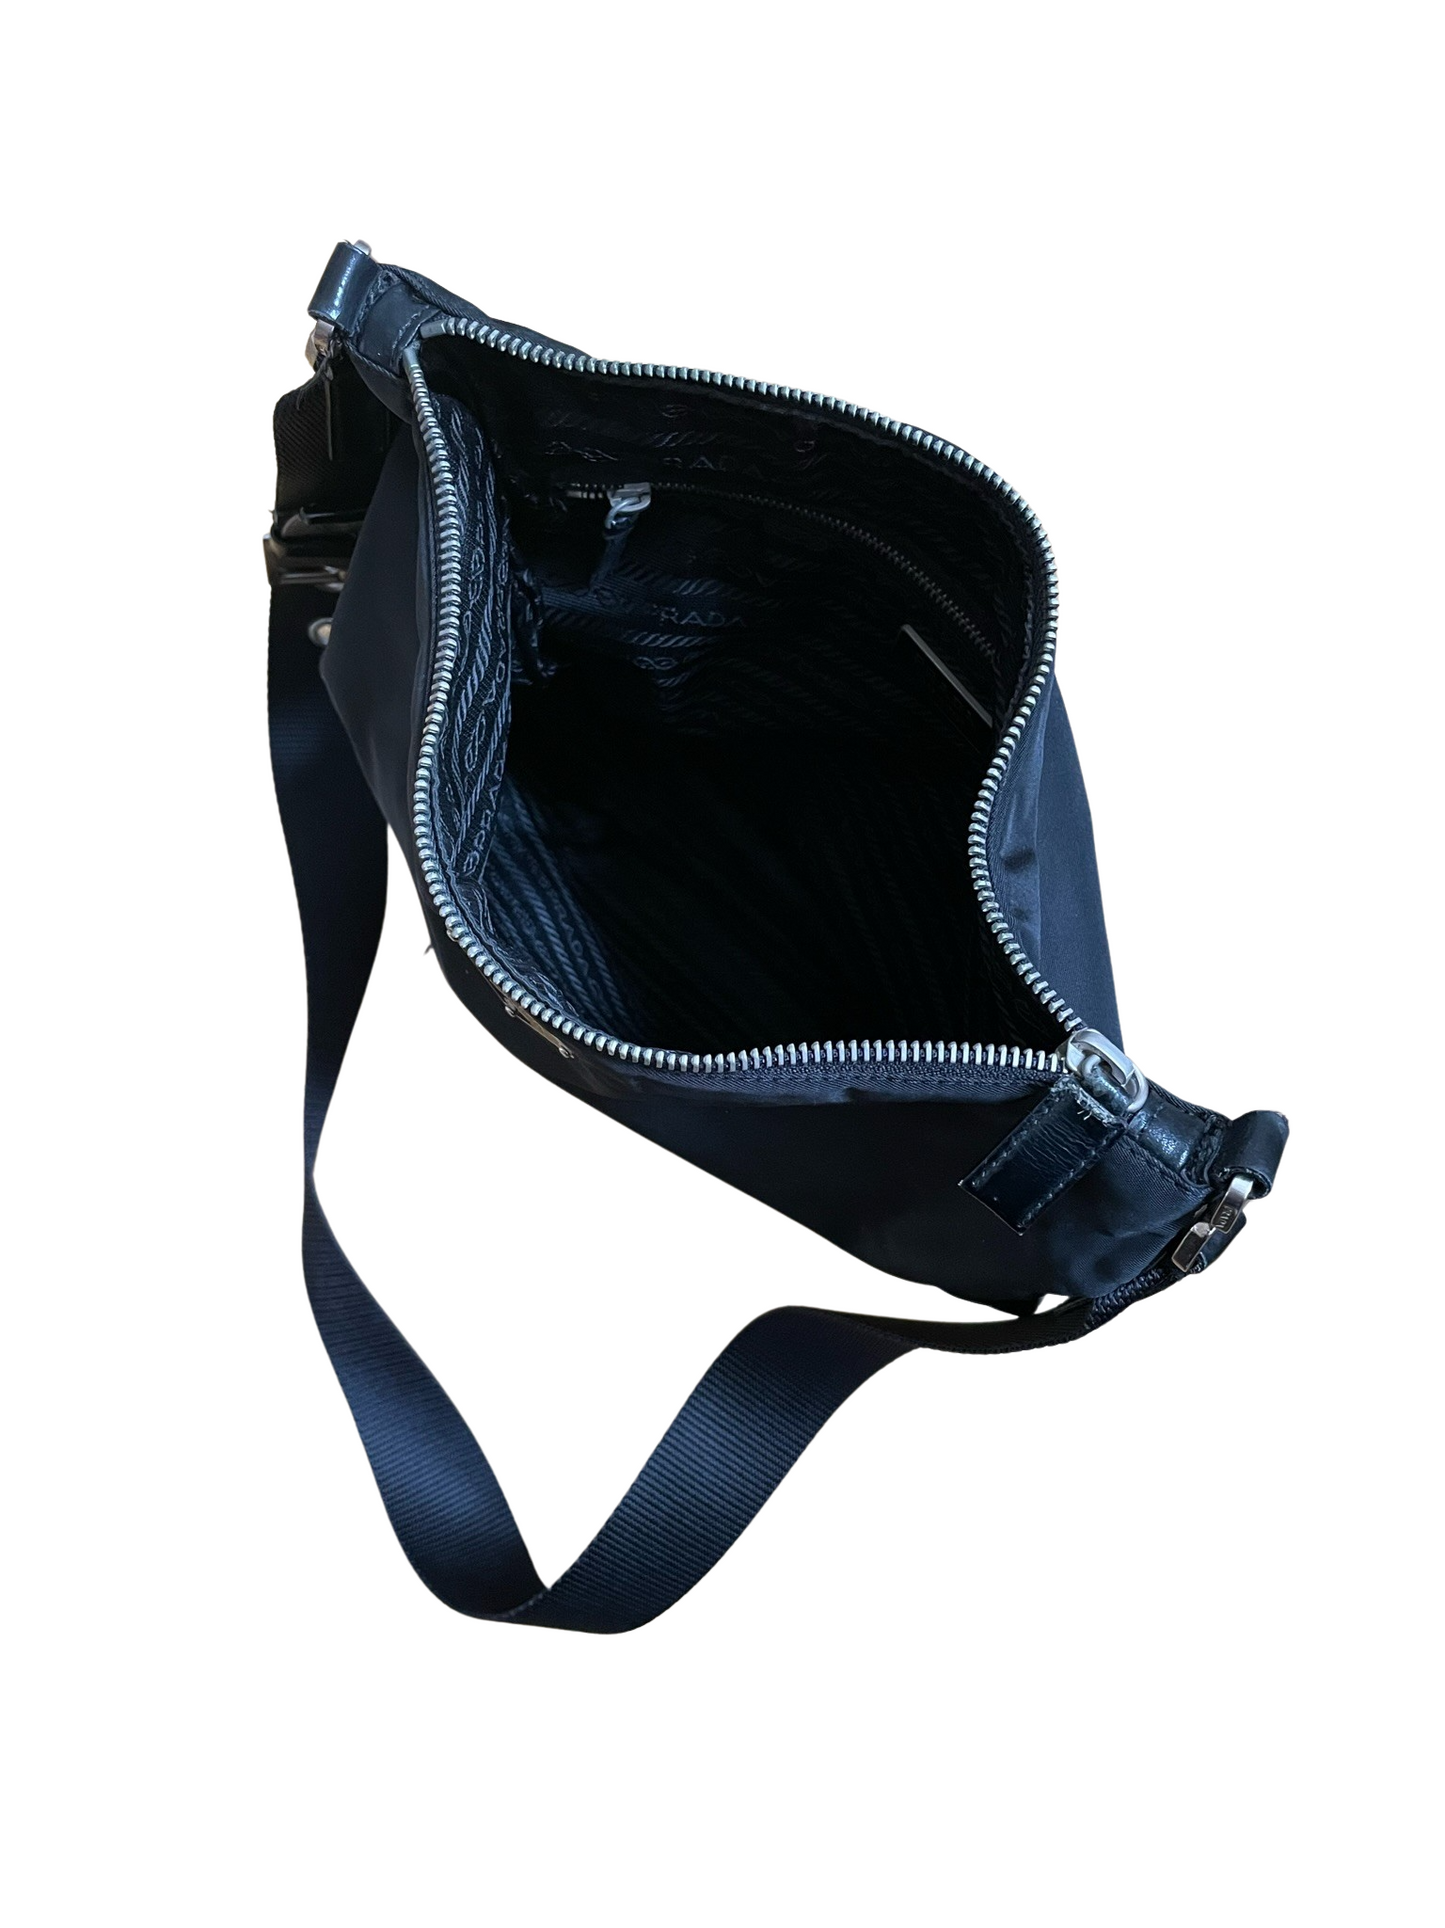 Prada Black Nylon Leather Shoulder Bag